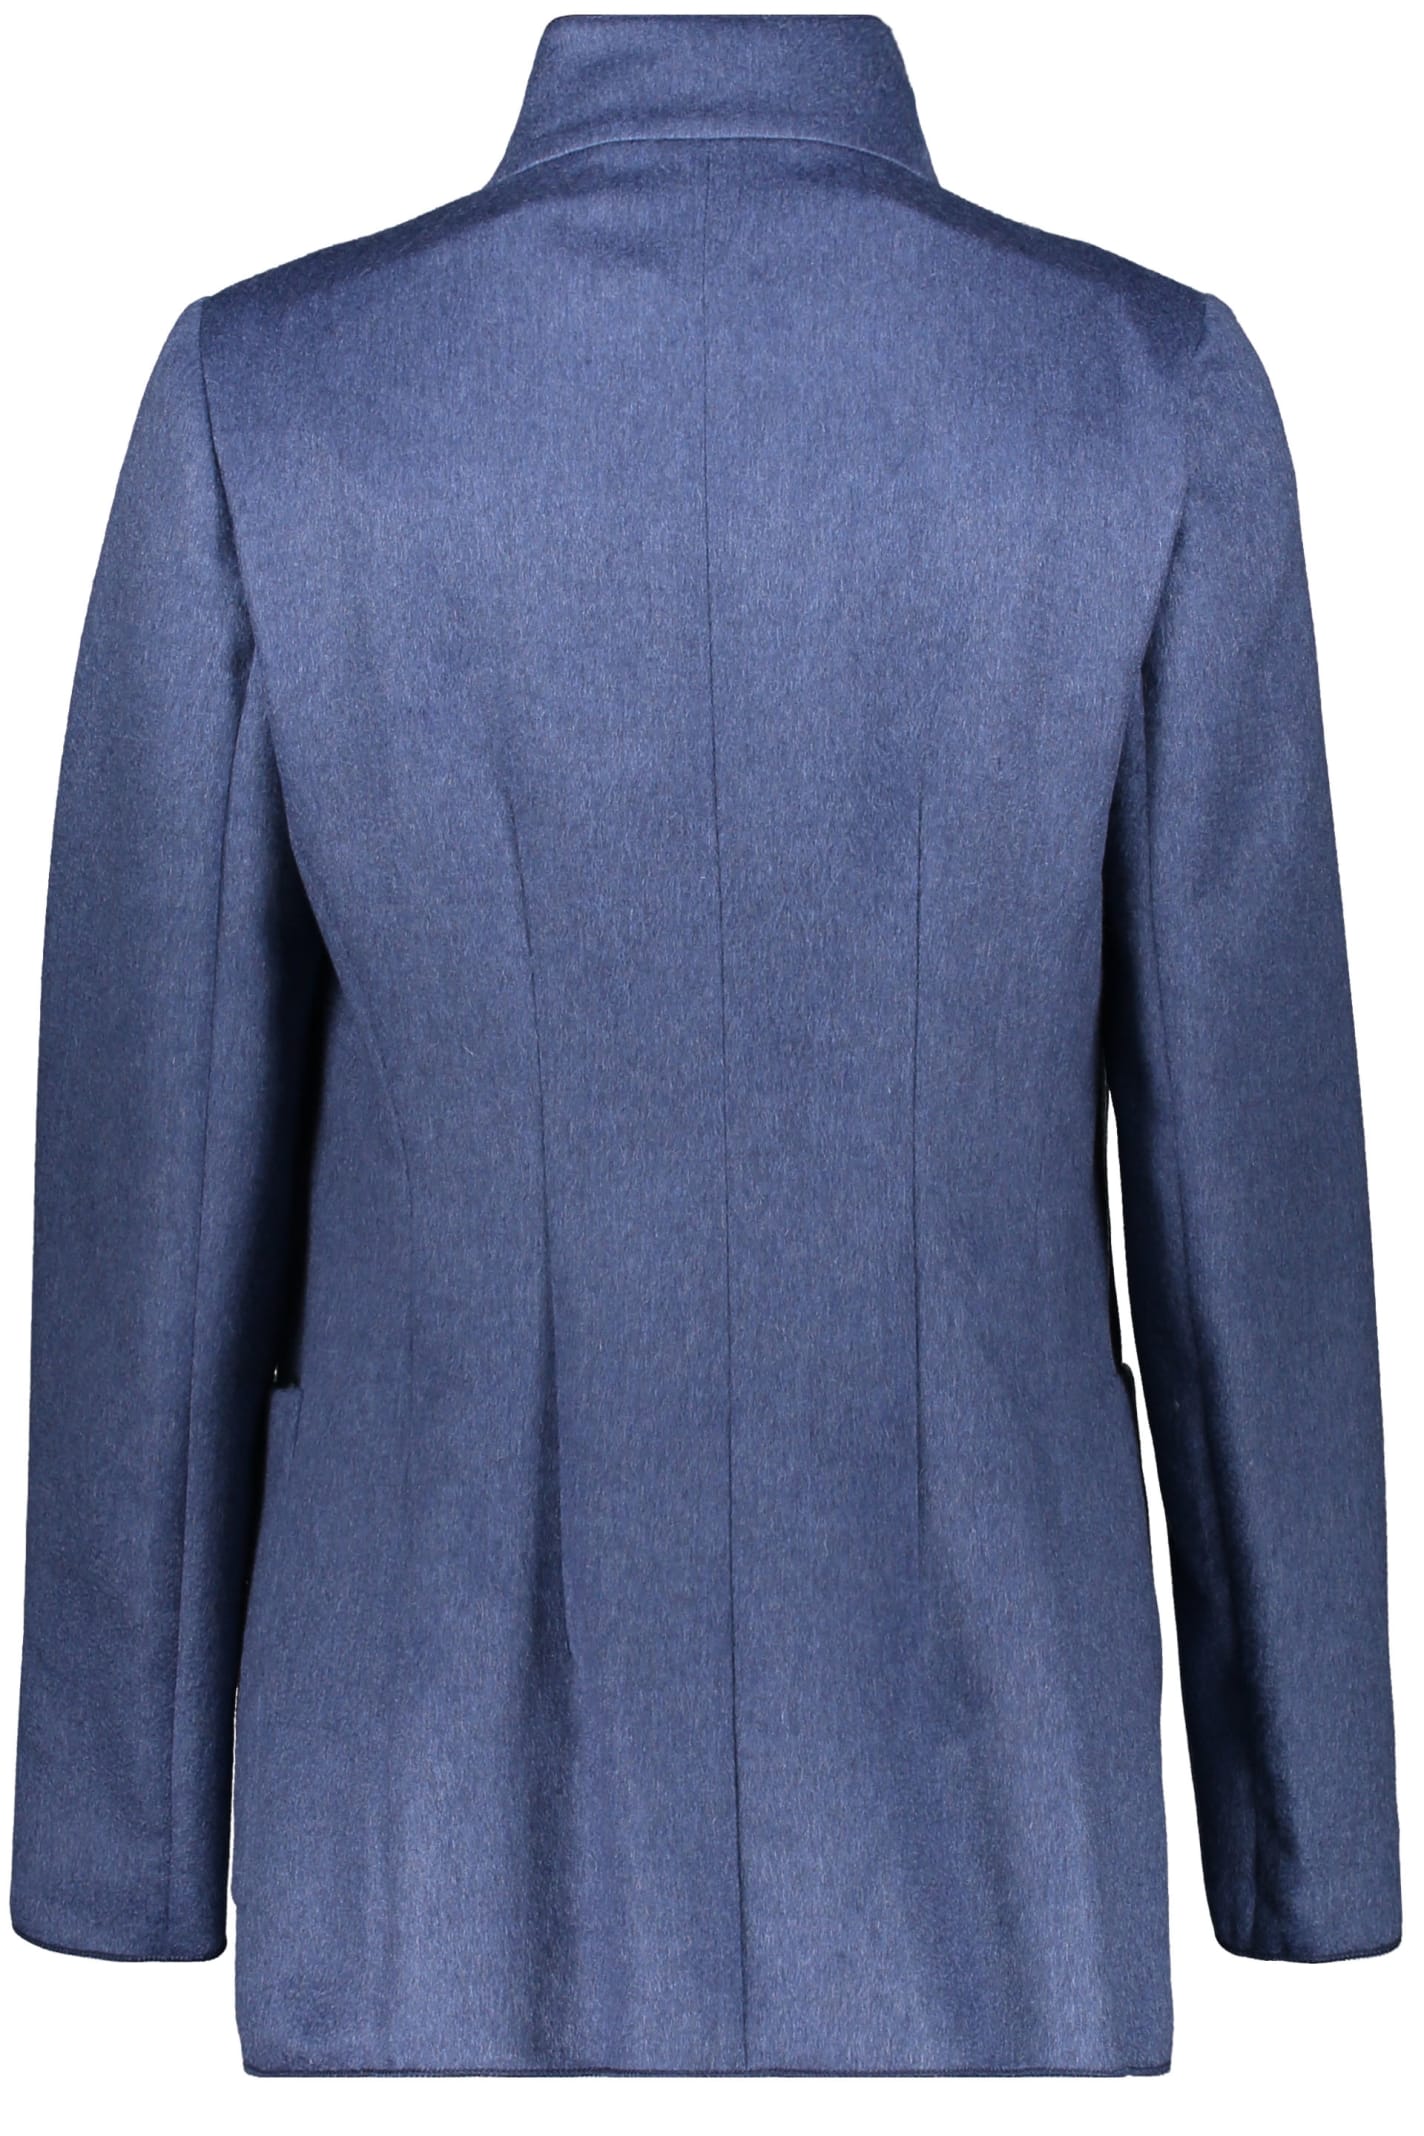 Agnona Cashmere Jacket In Blue